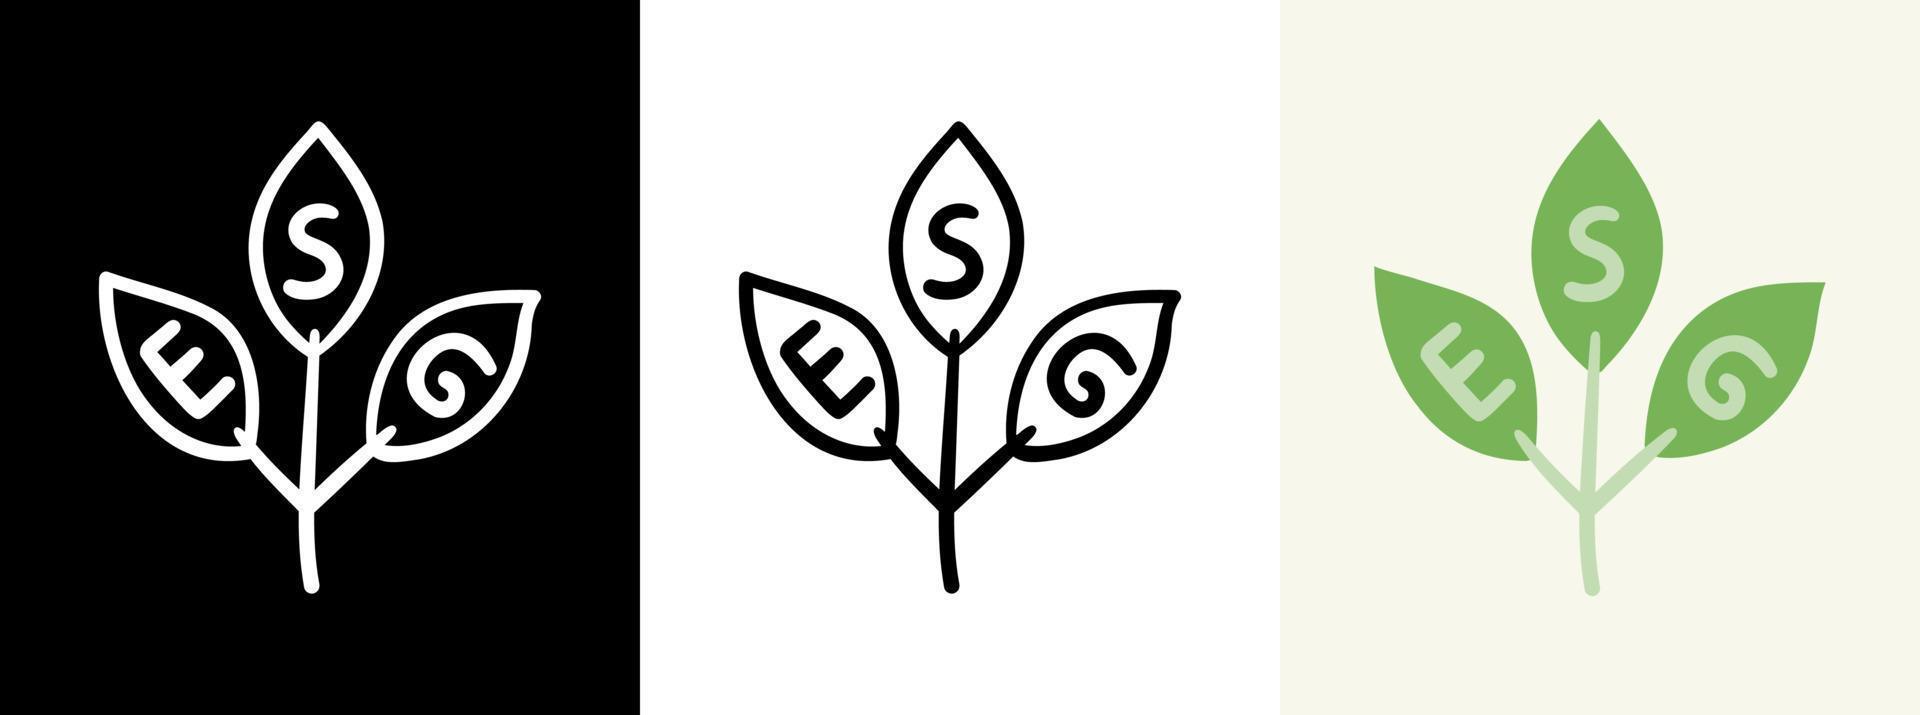 Environment Social Governance concept icon set vector illustration